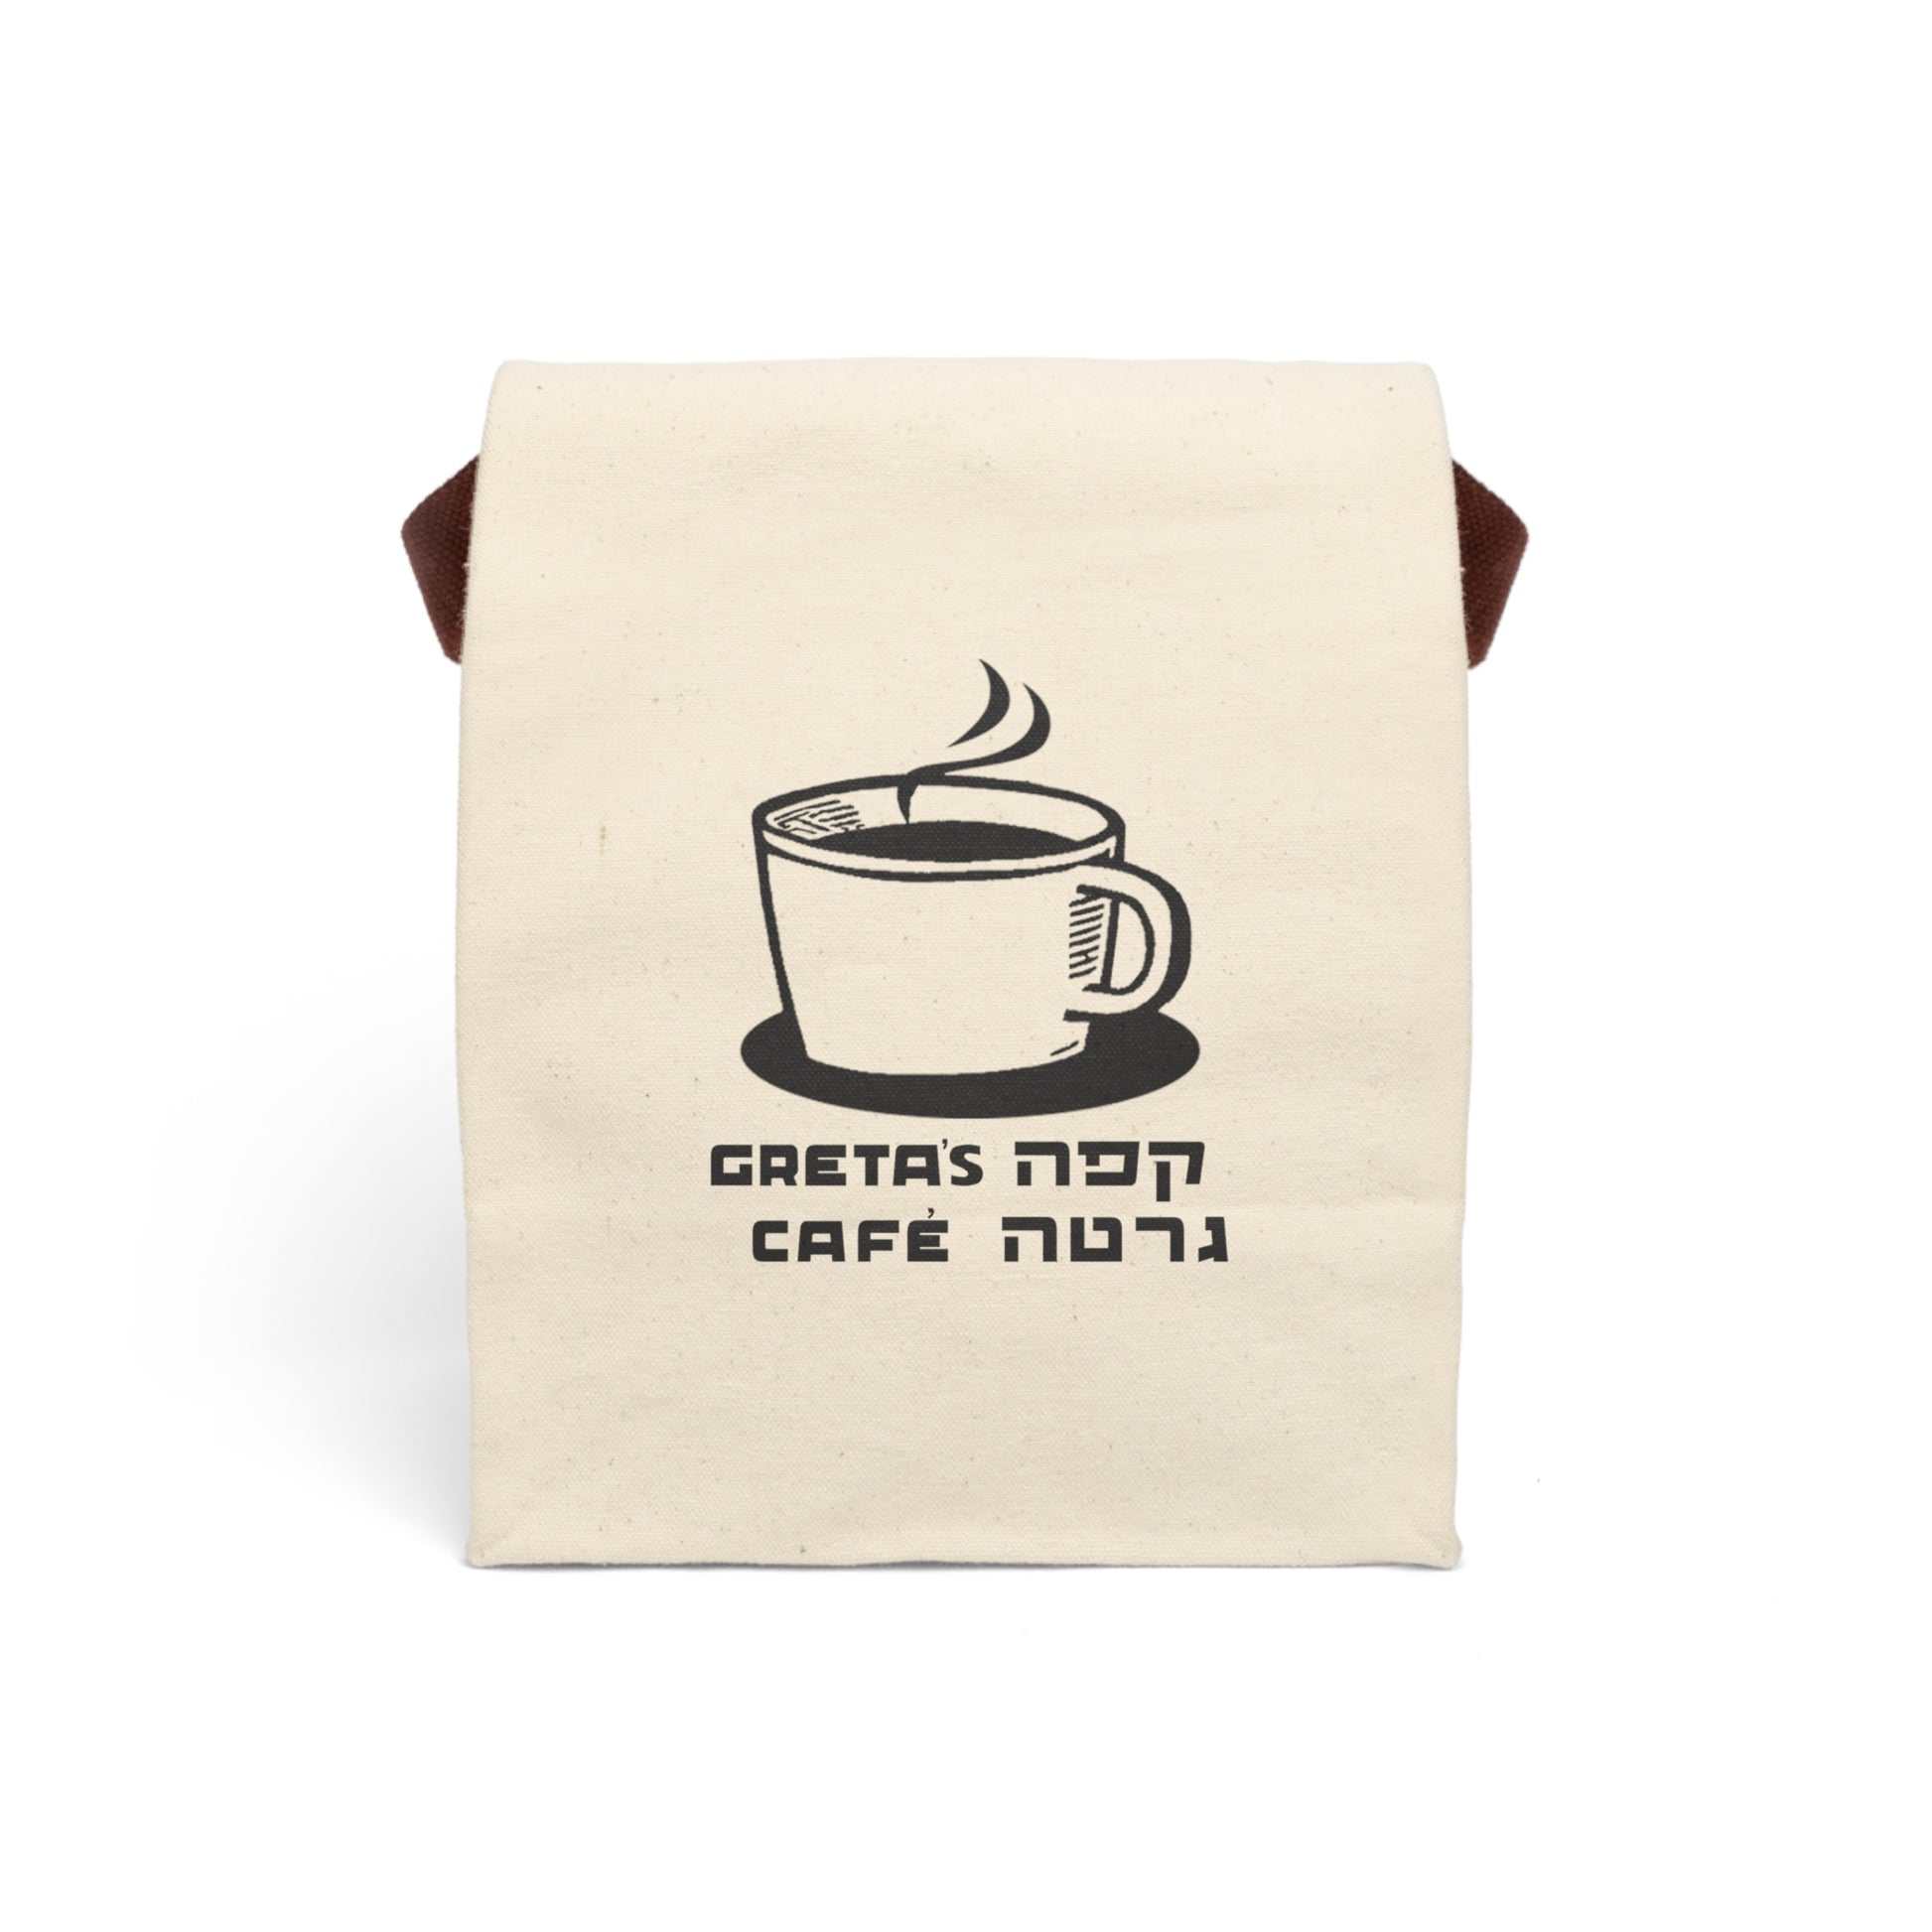 Greta's Cafe Canvas Lunch Bag